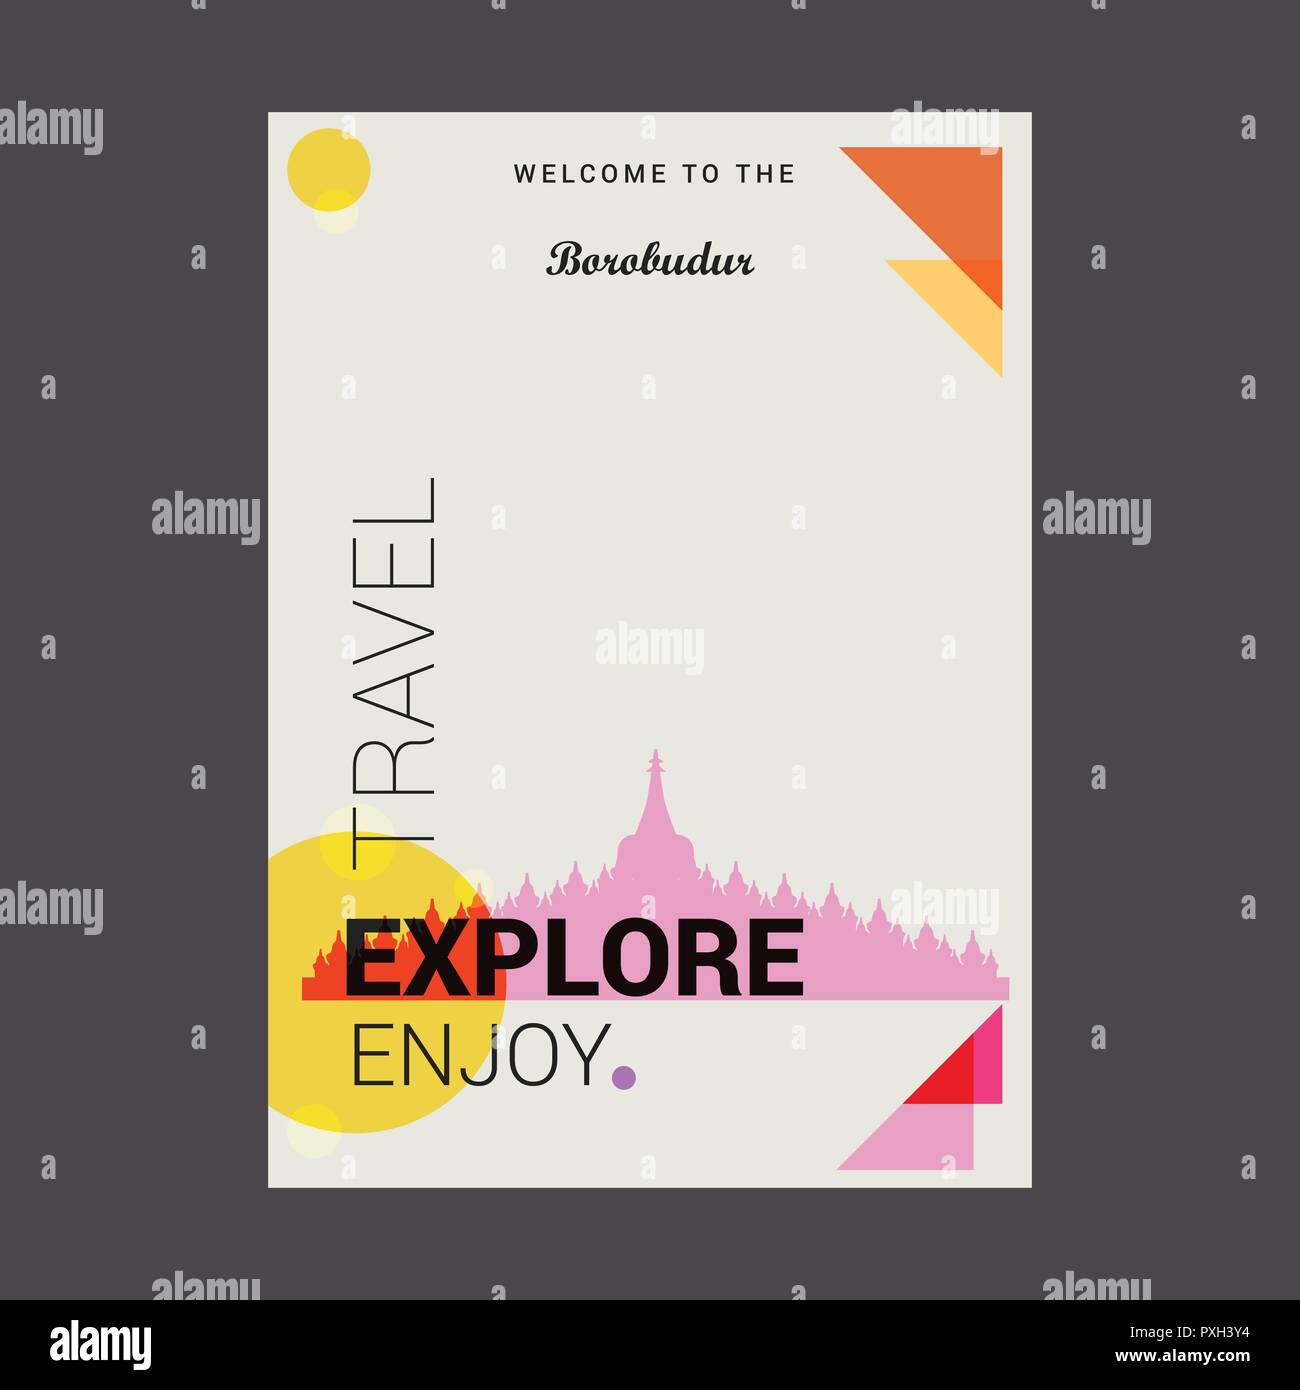 Welcome to The Borobudur Jawa Tengah, Indonesia Explore, Travel Enjoy Poster Template Stock Vector